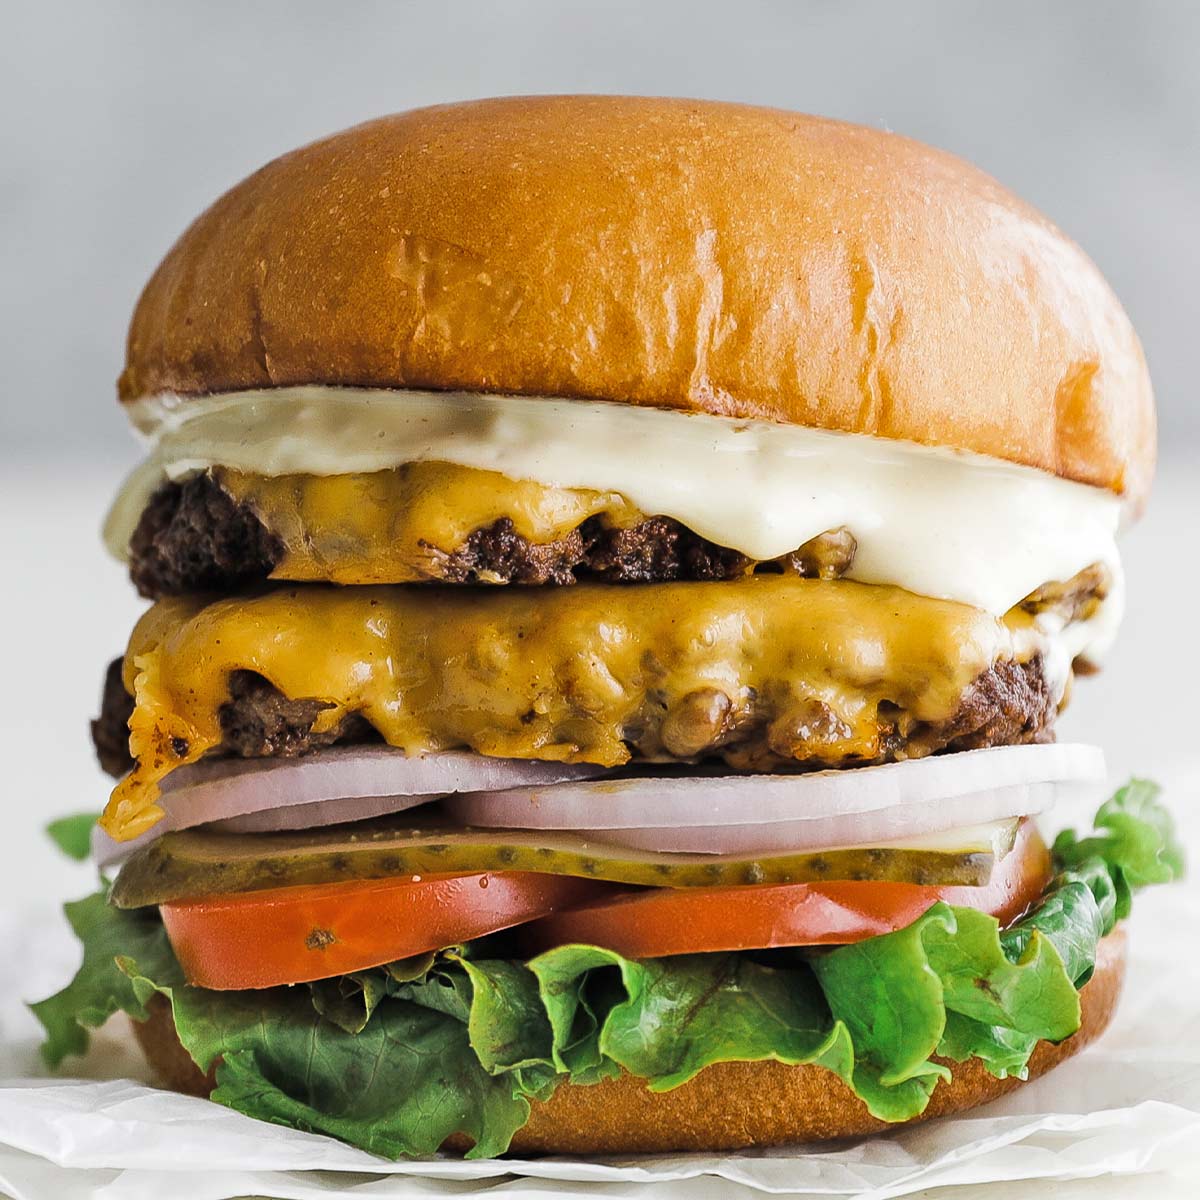 https://www.billyparisi.com/wp-content/uploads/2022/05/smash-burger-featured-2.jpg